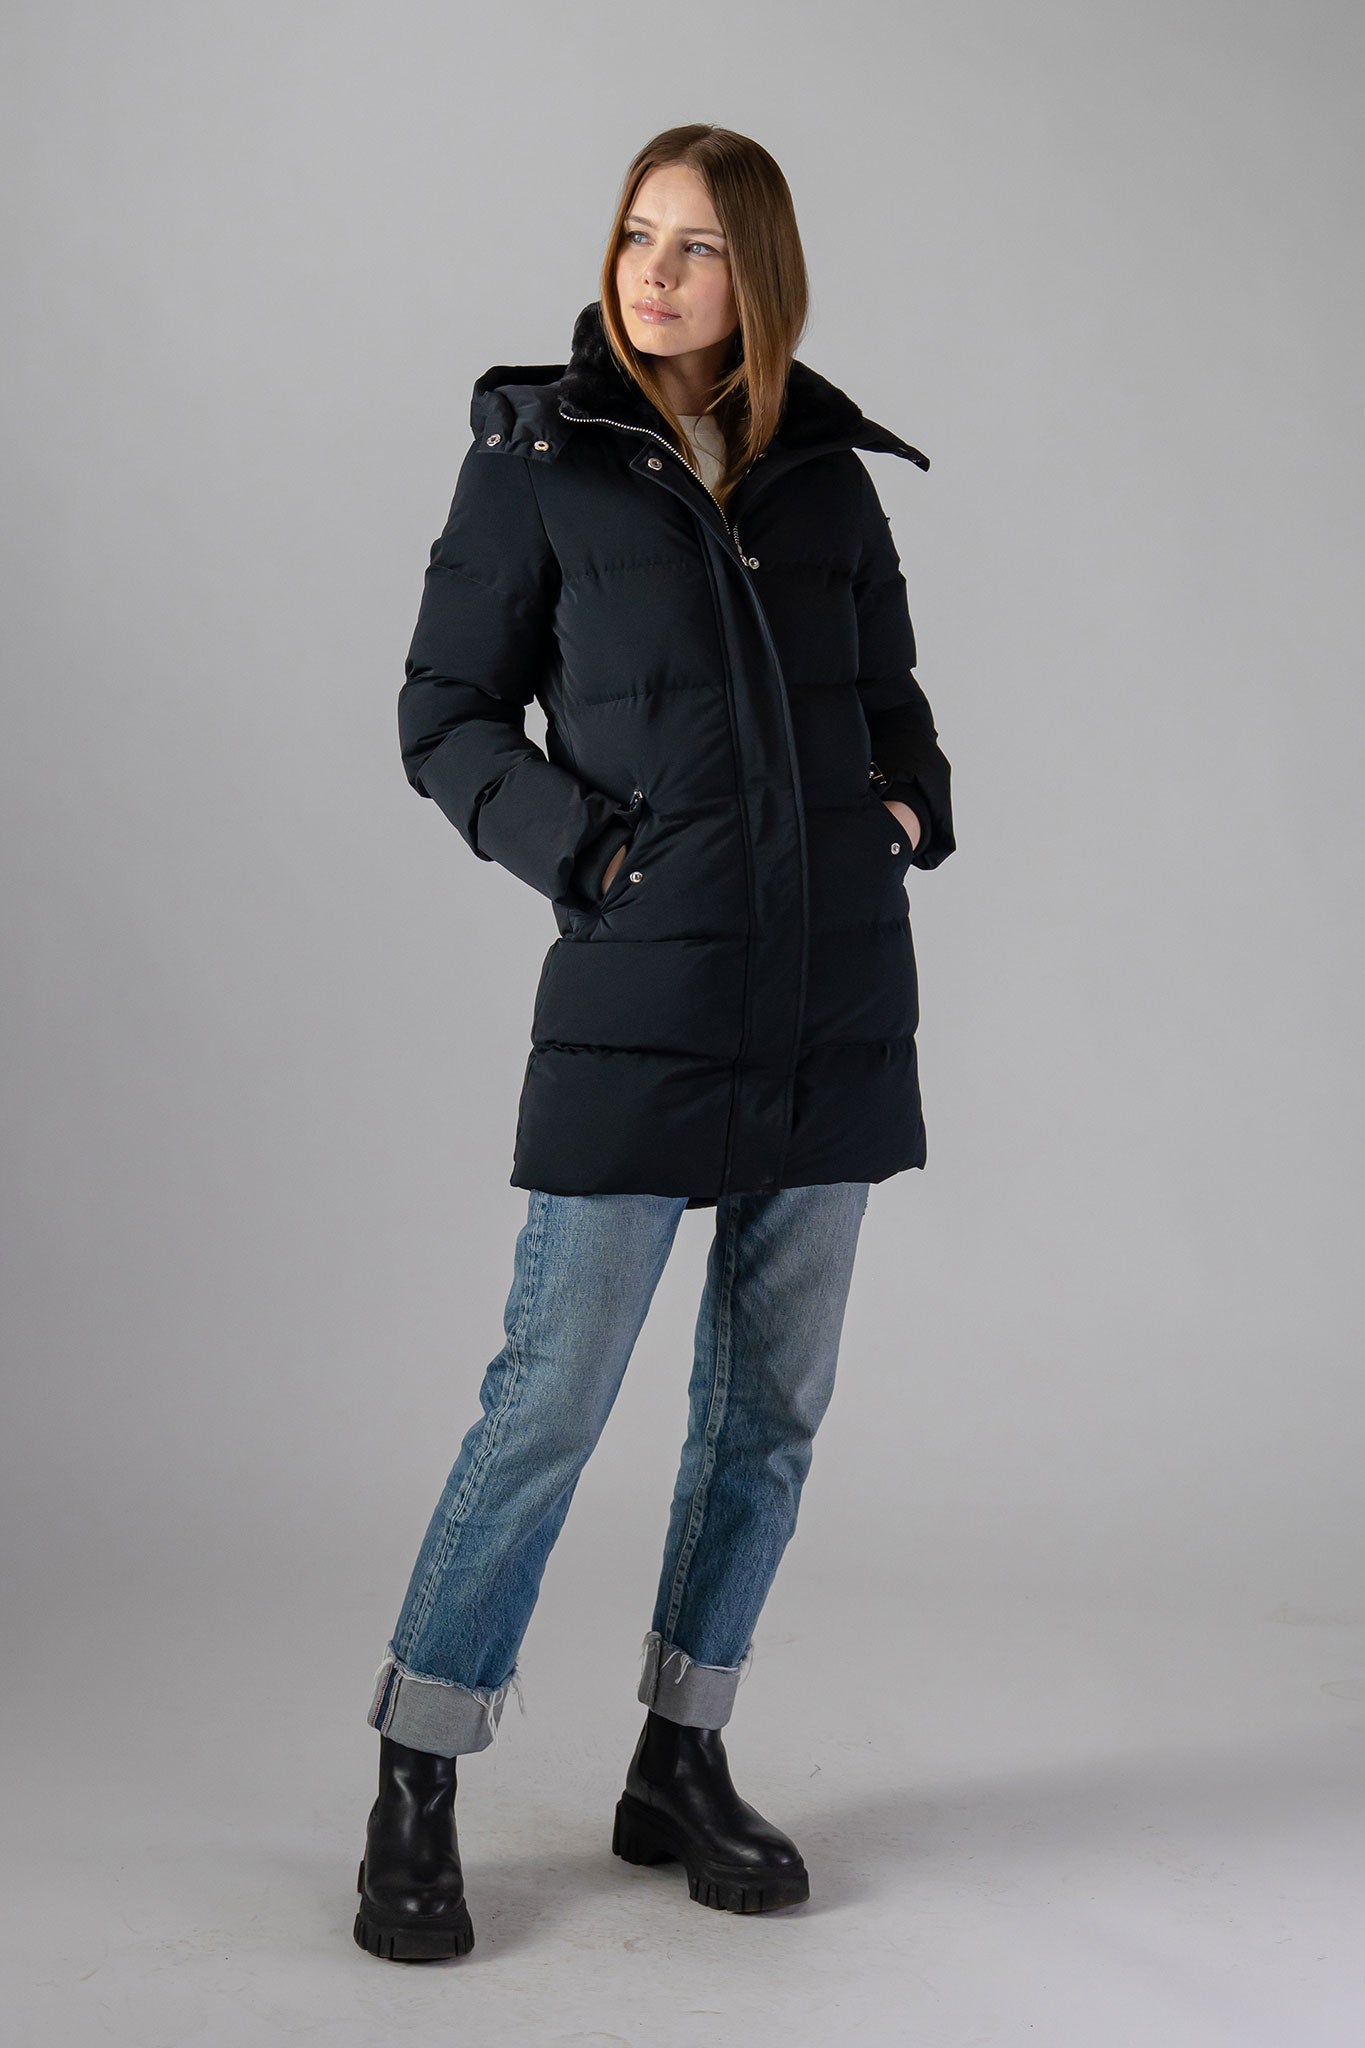 Woodpecker Women's Penguin Long Winter coat. High-end Canadian designer winter coat for women in 